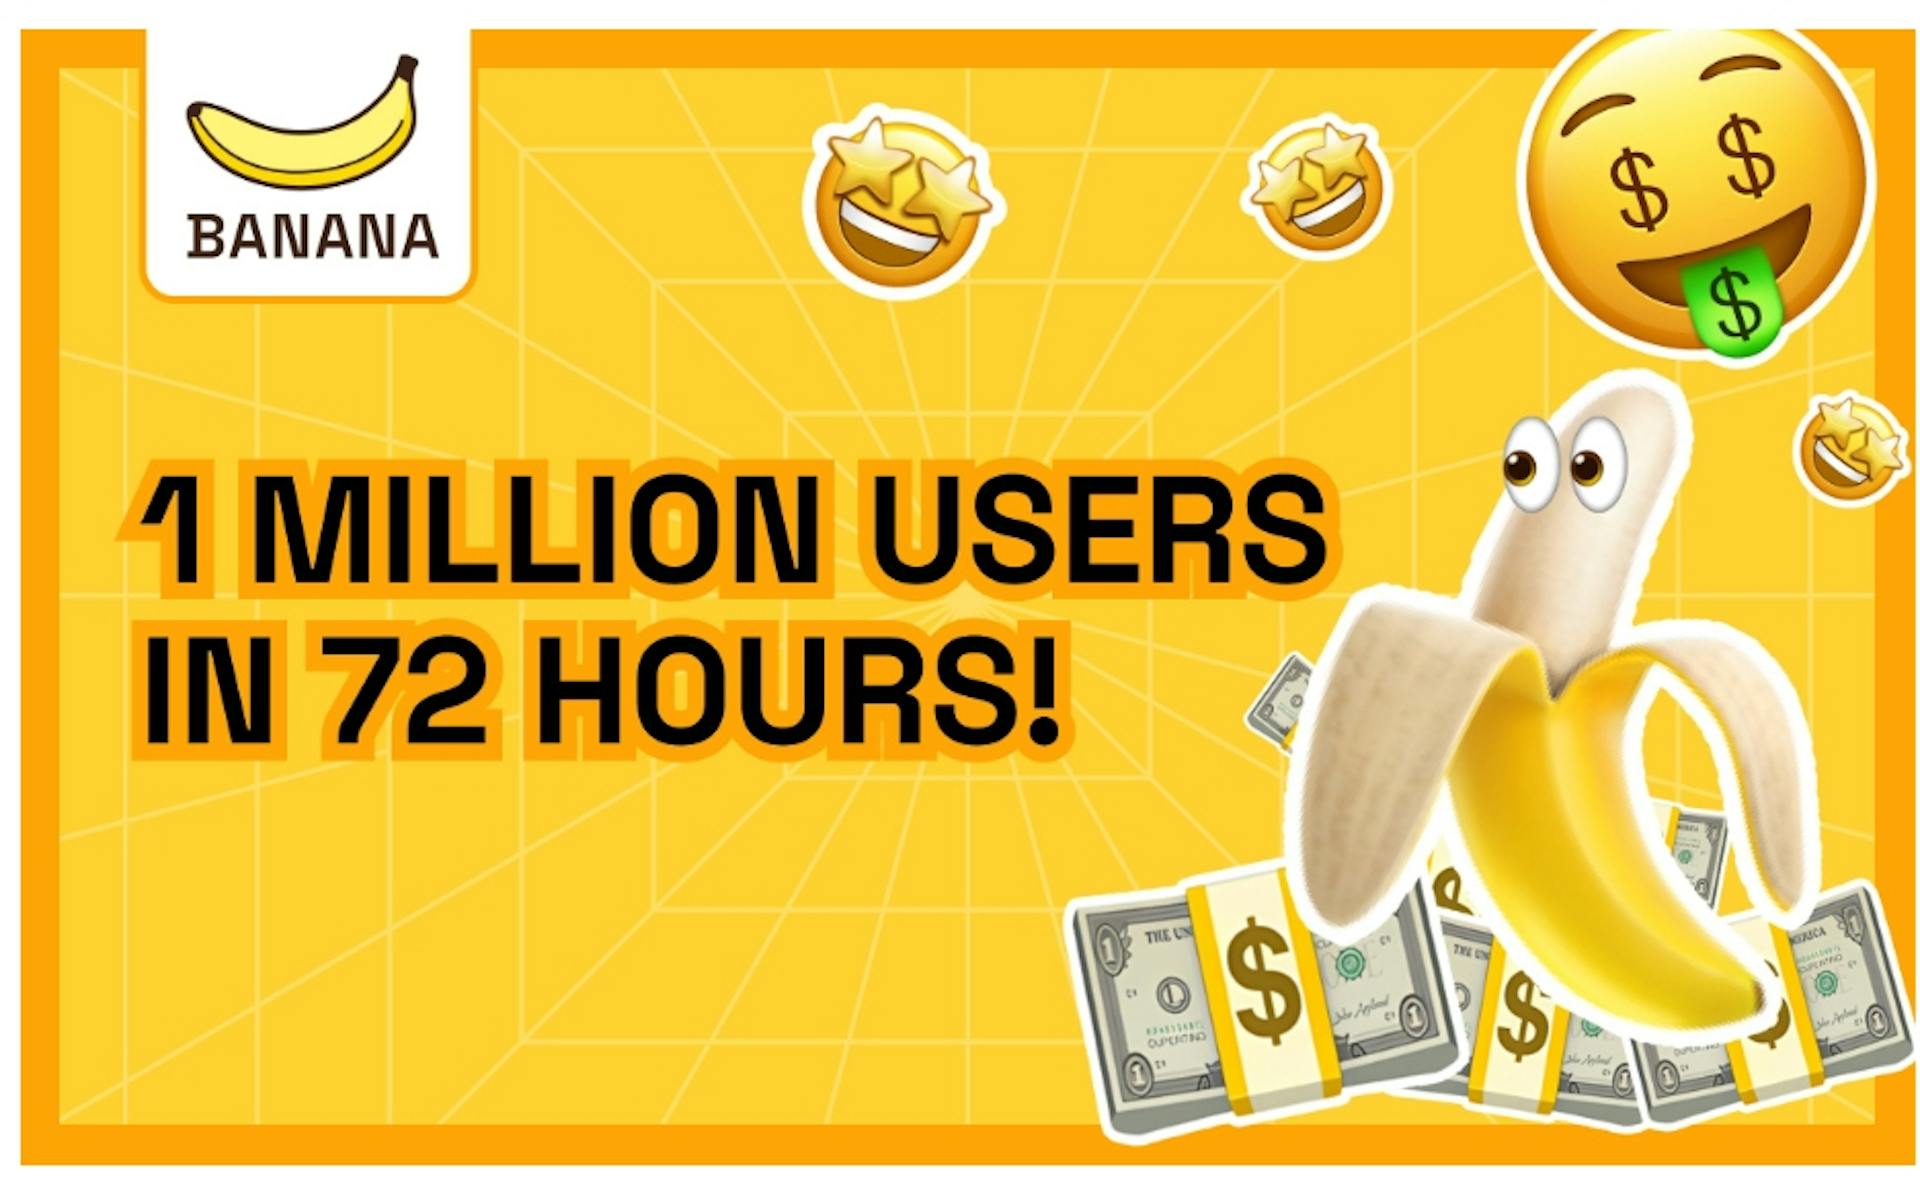 featured image - TON 游戏《BANANA》上线 72 小时内用户数量突破 100 万